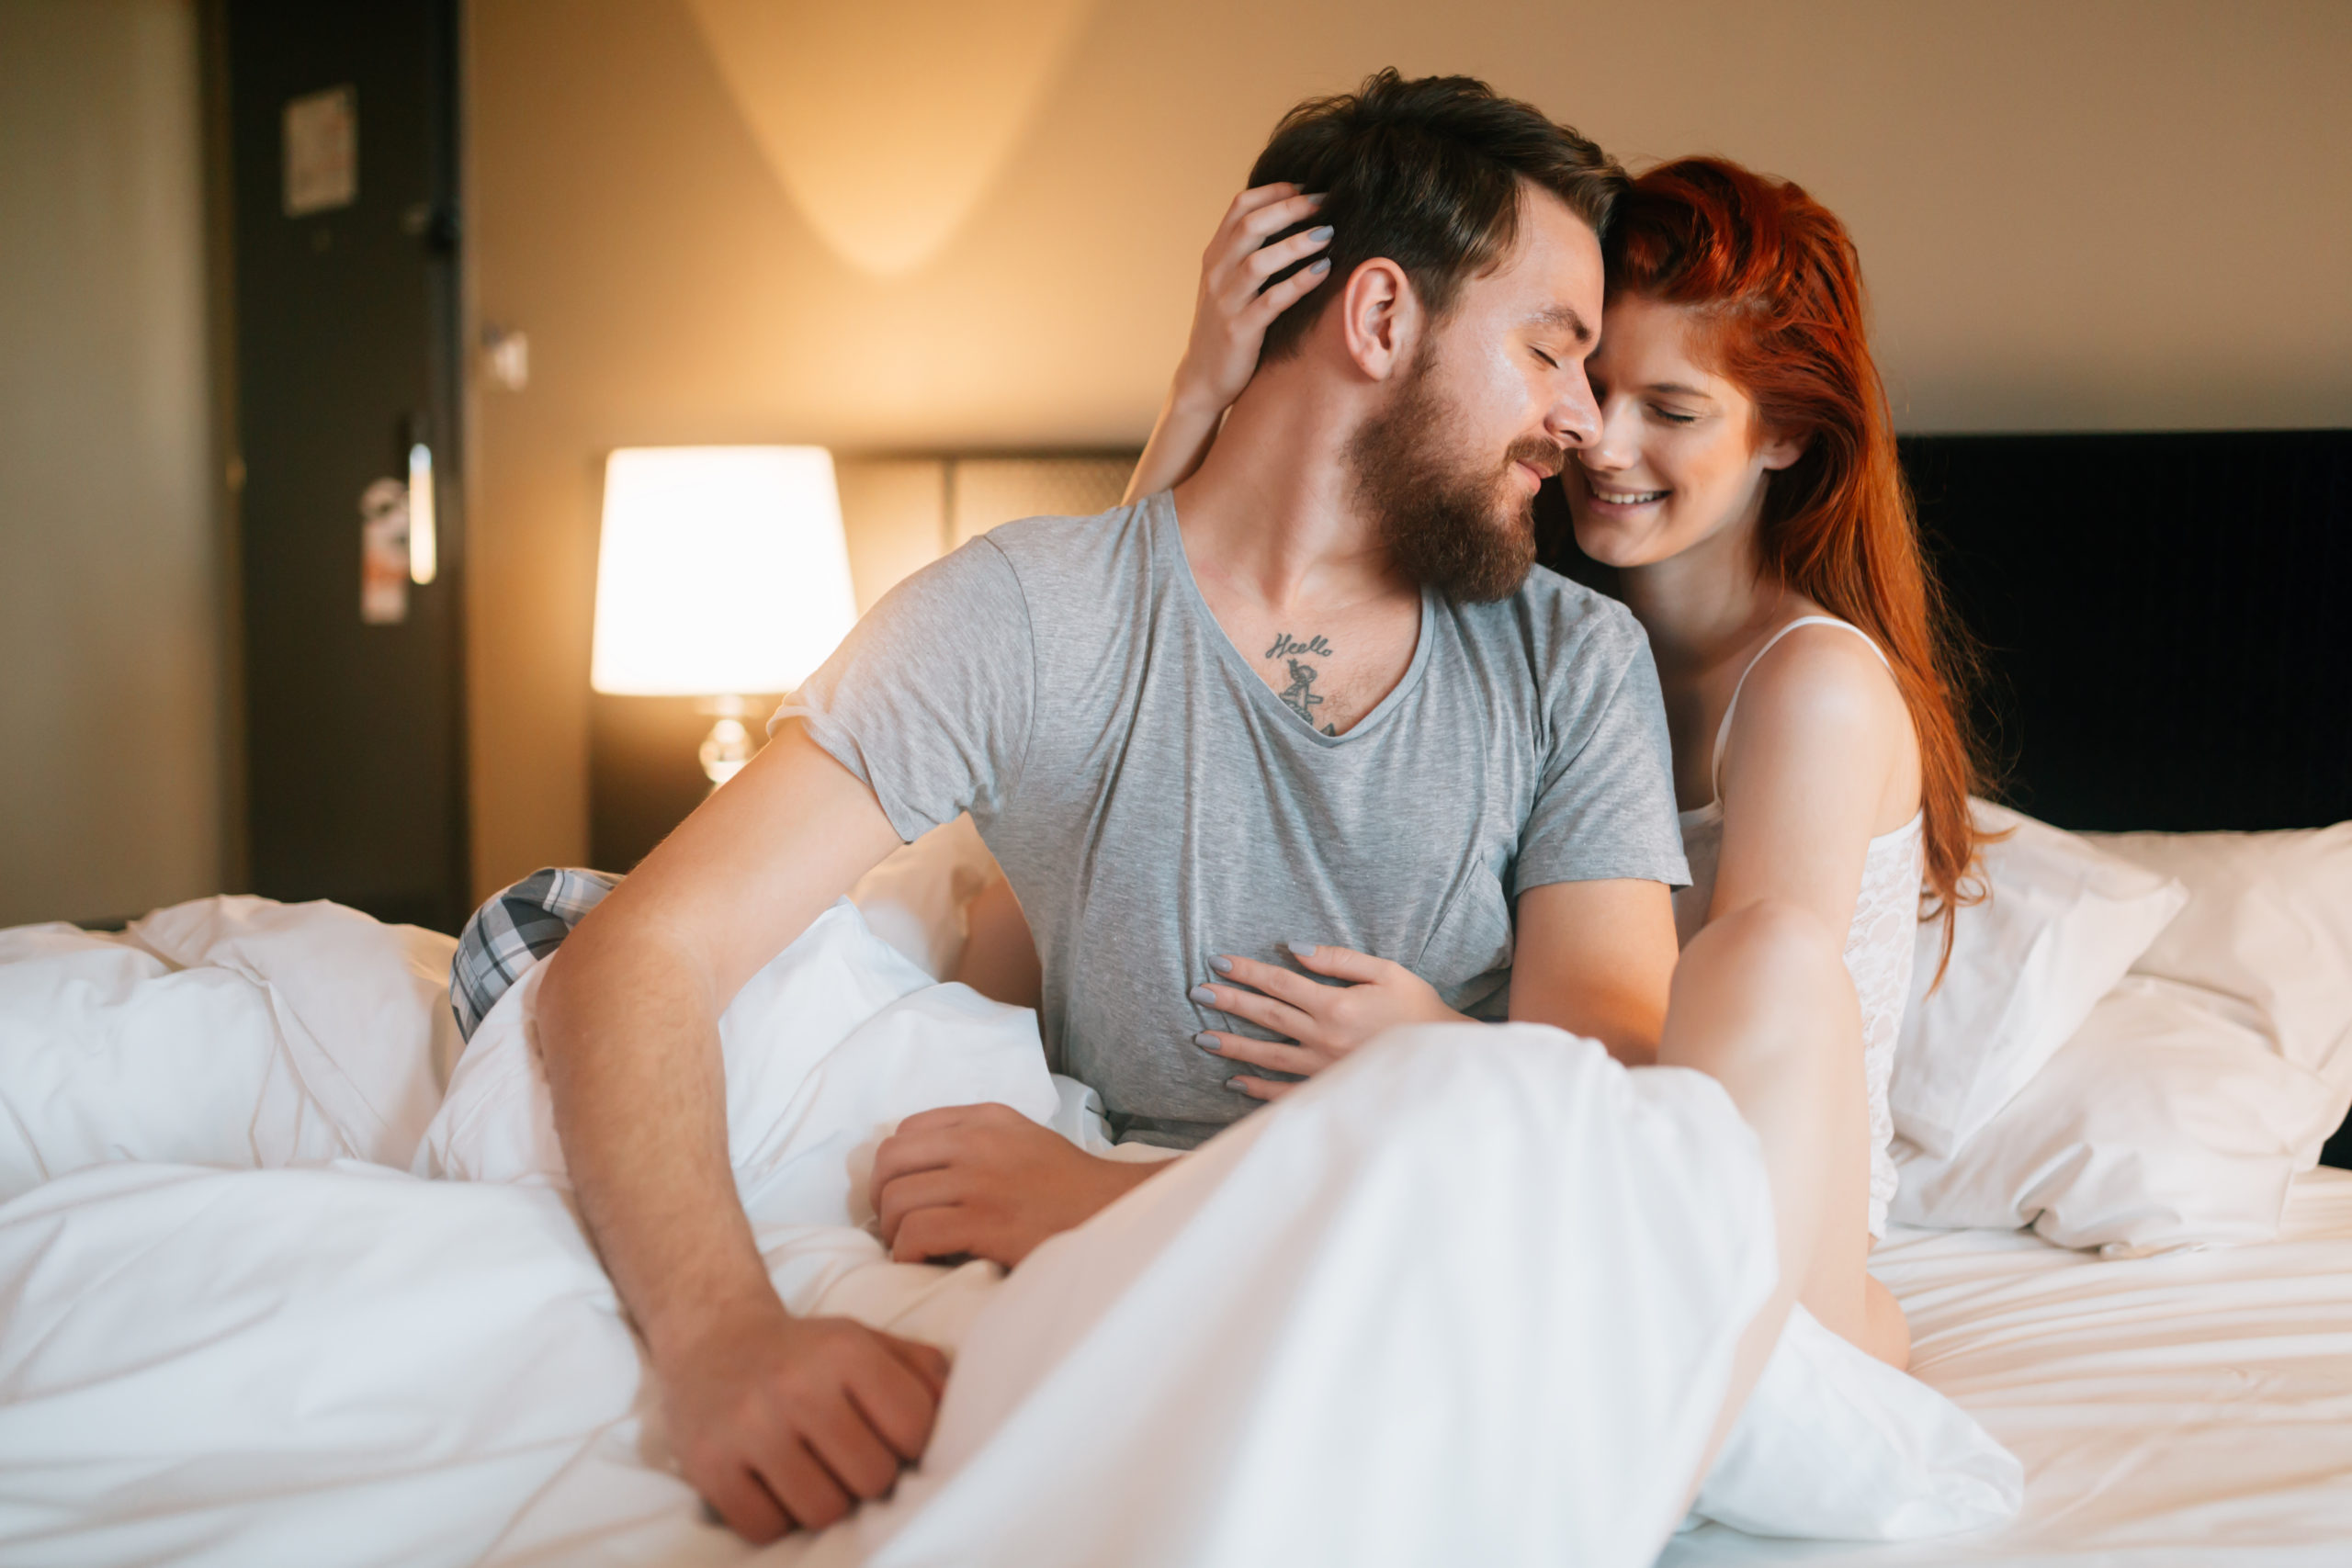 How Can Men Improve Their Satisfaction in the Bedroom?